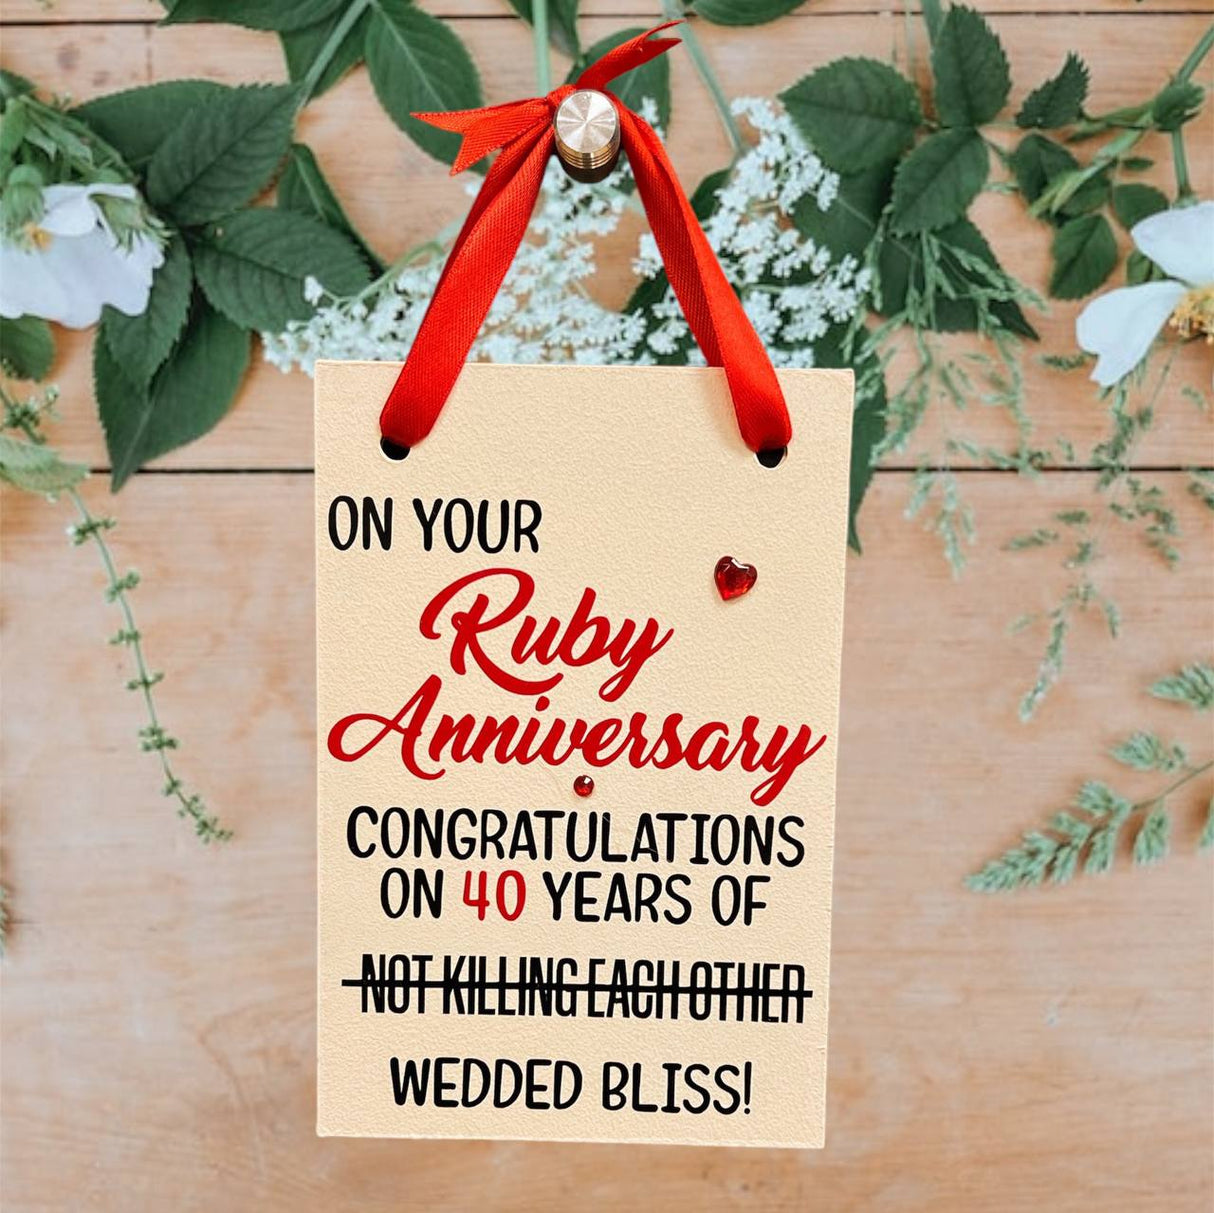 Ruby Anniversary - Wedded Bliss!